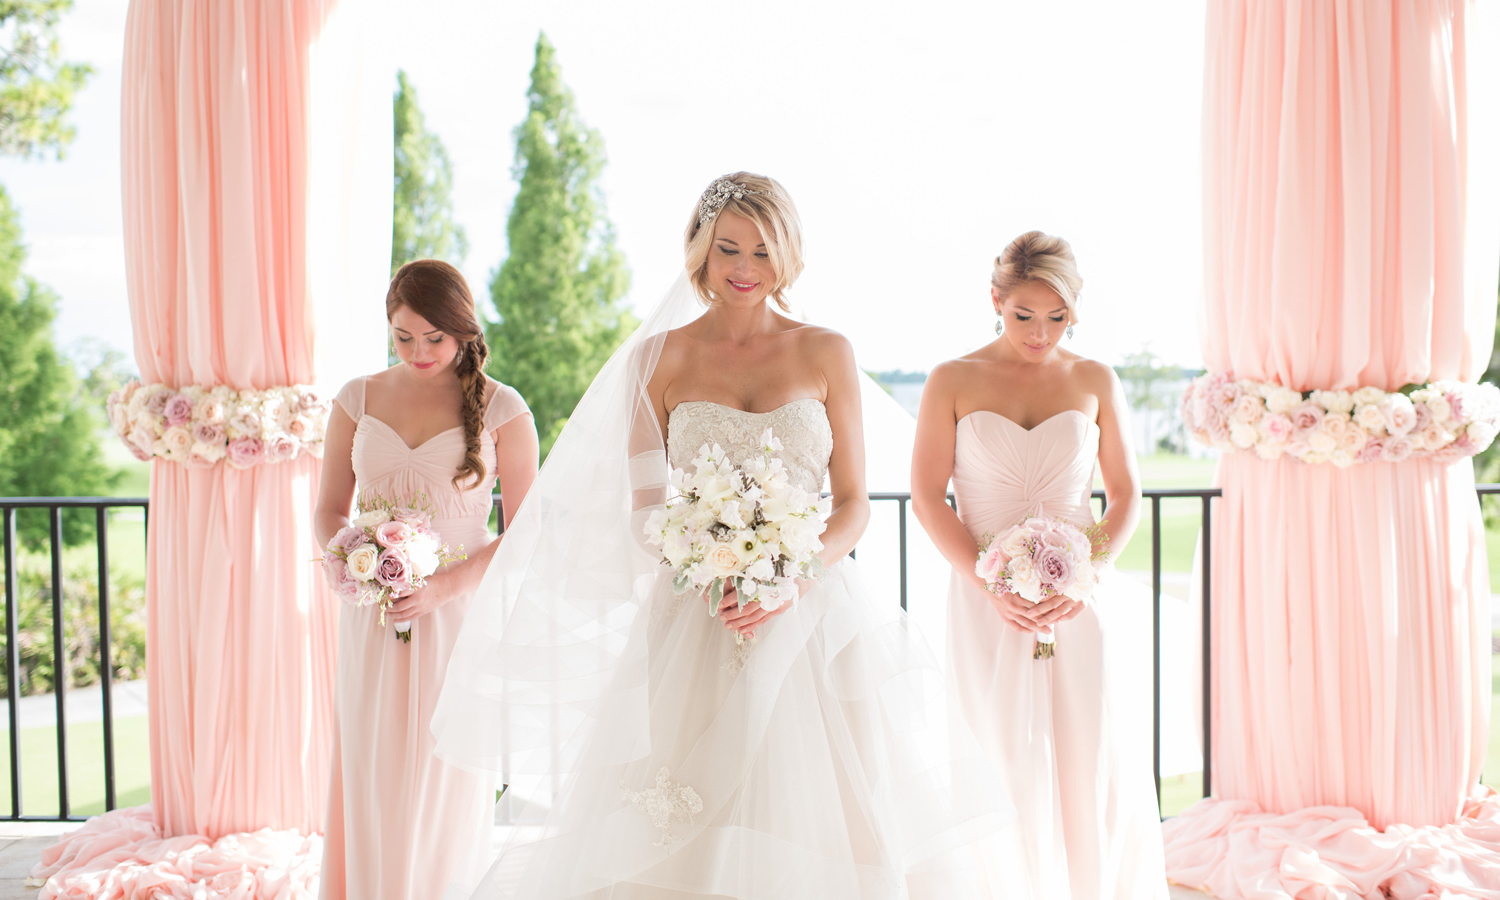  Wedding Photographer: Kathy Thomas Photography | Wedding Ceremony: Lake Nona | Wedding Planner: The Busy Bee 